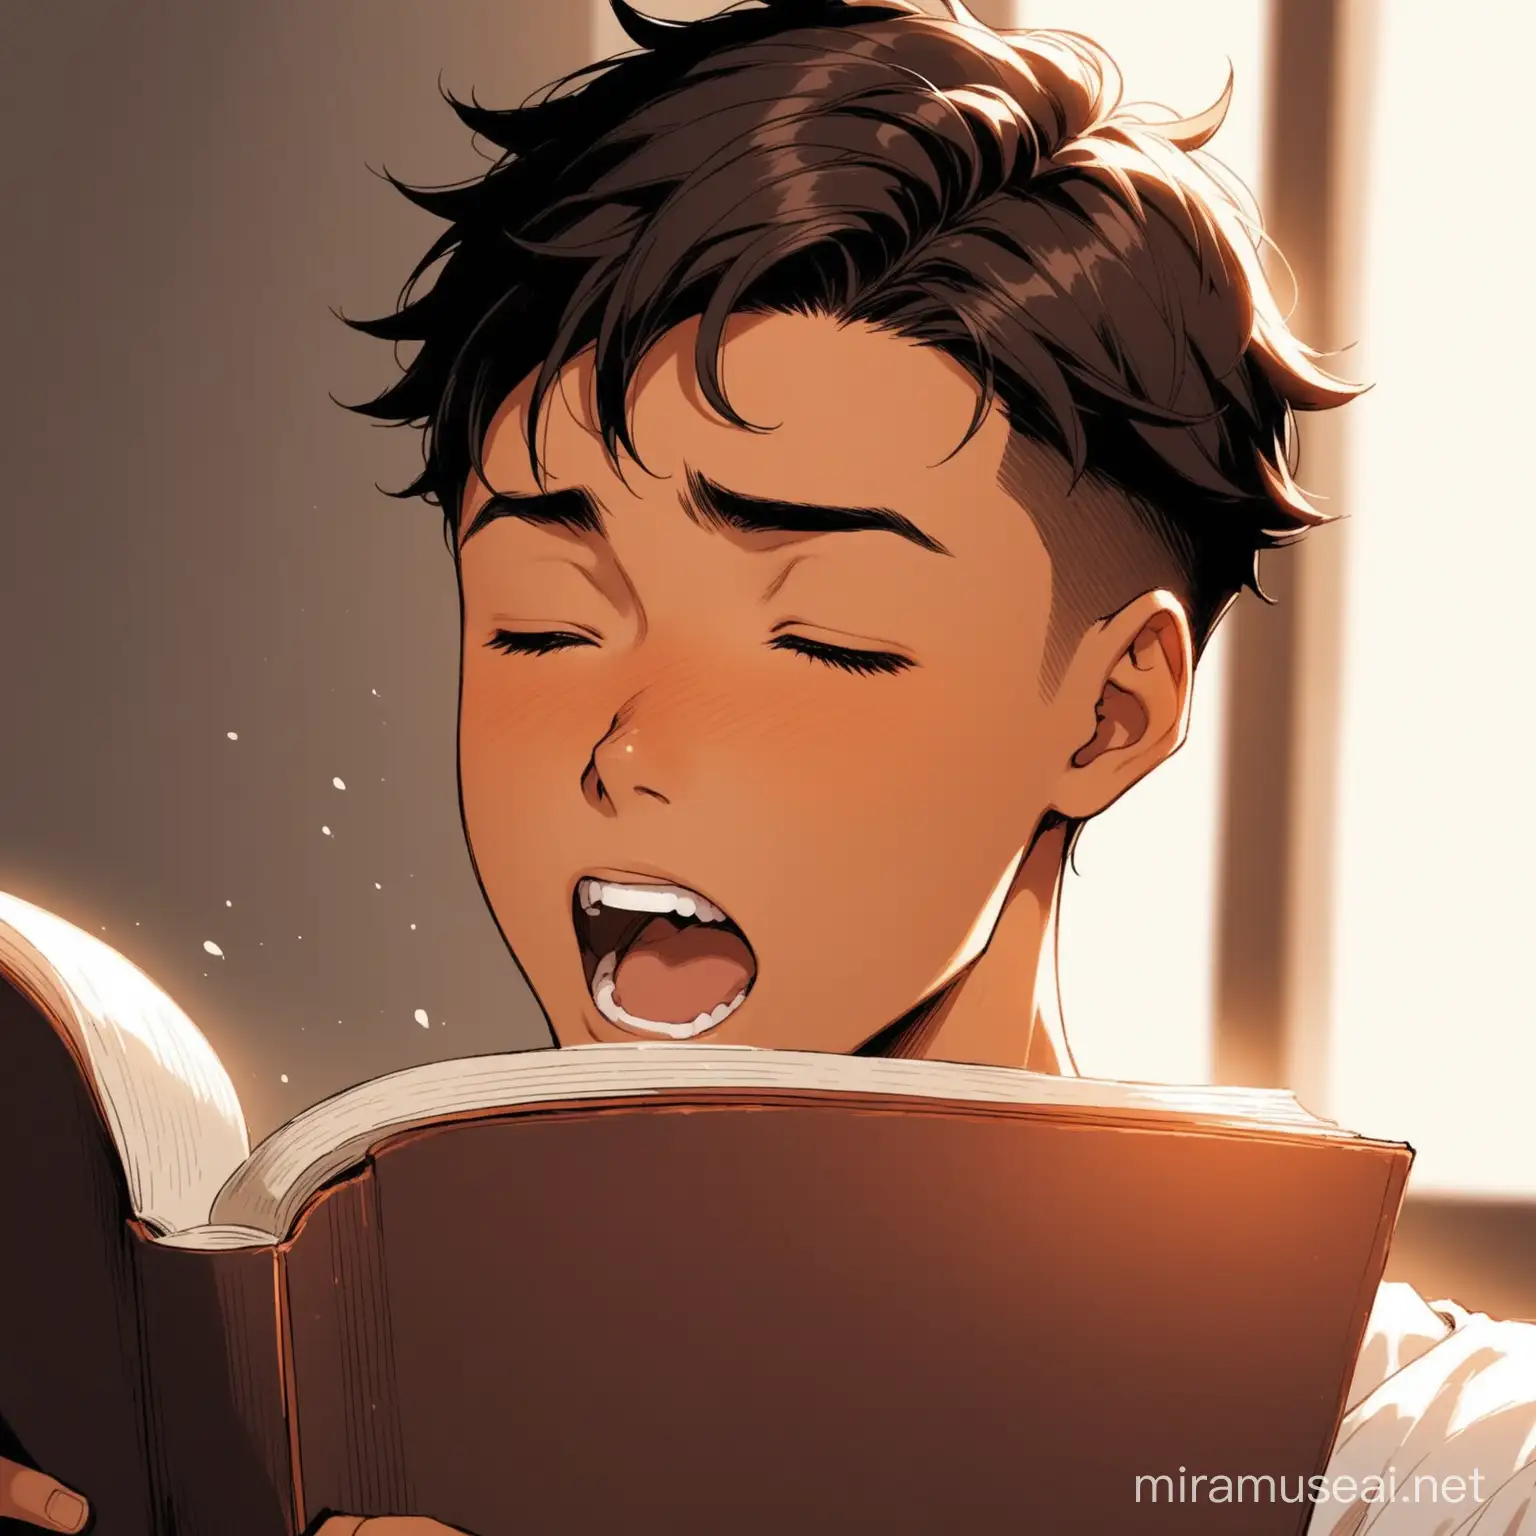 Handsome DarkSkinned Teenage Boy Yawning While Reading